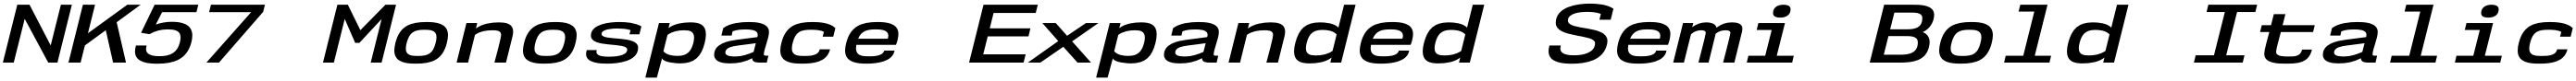 NK57 Monospace Expanded Semi Bold Italic